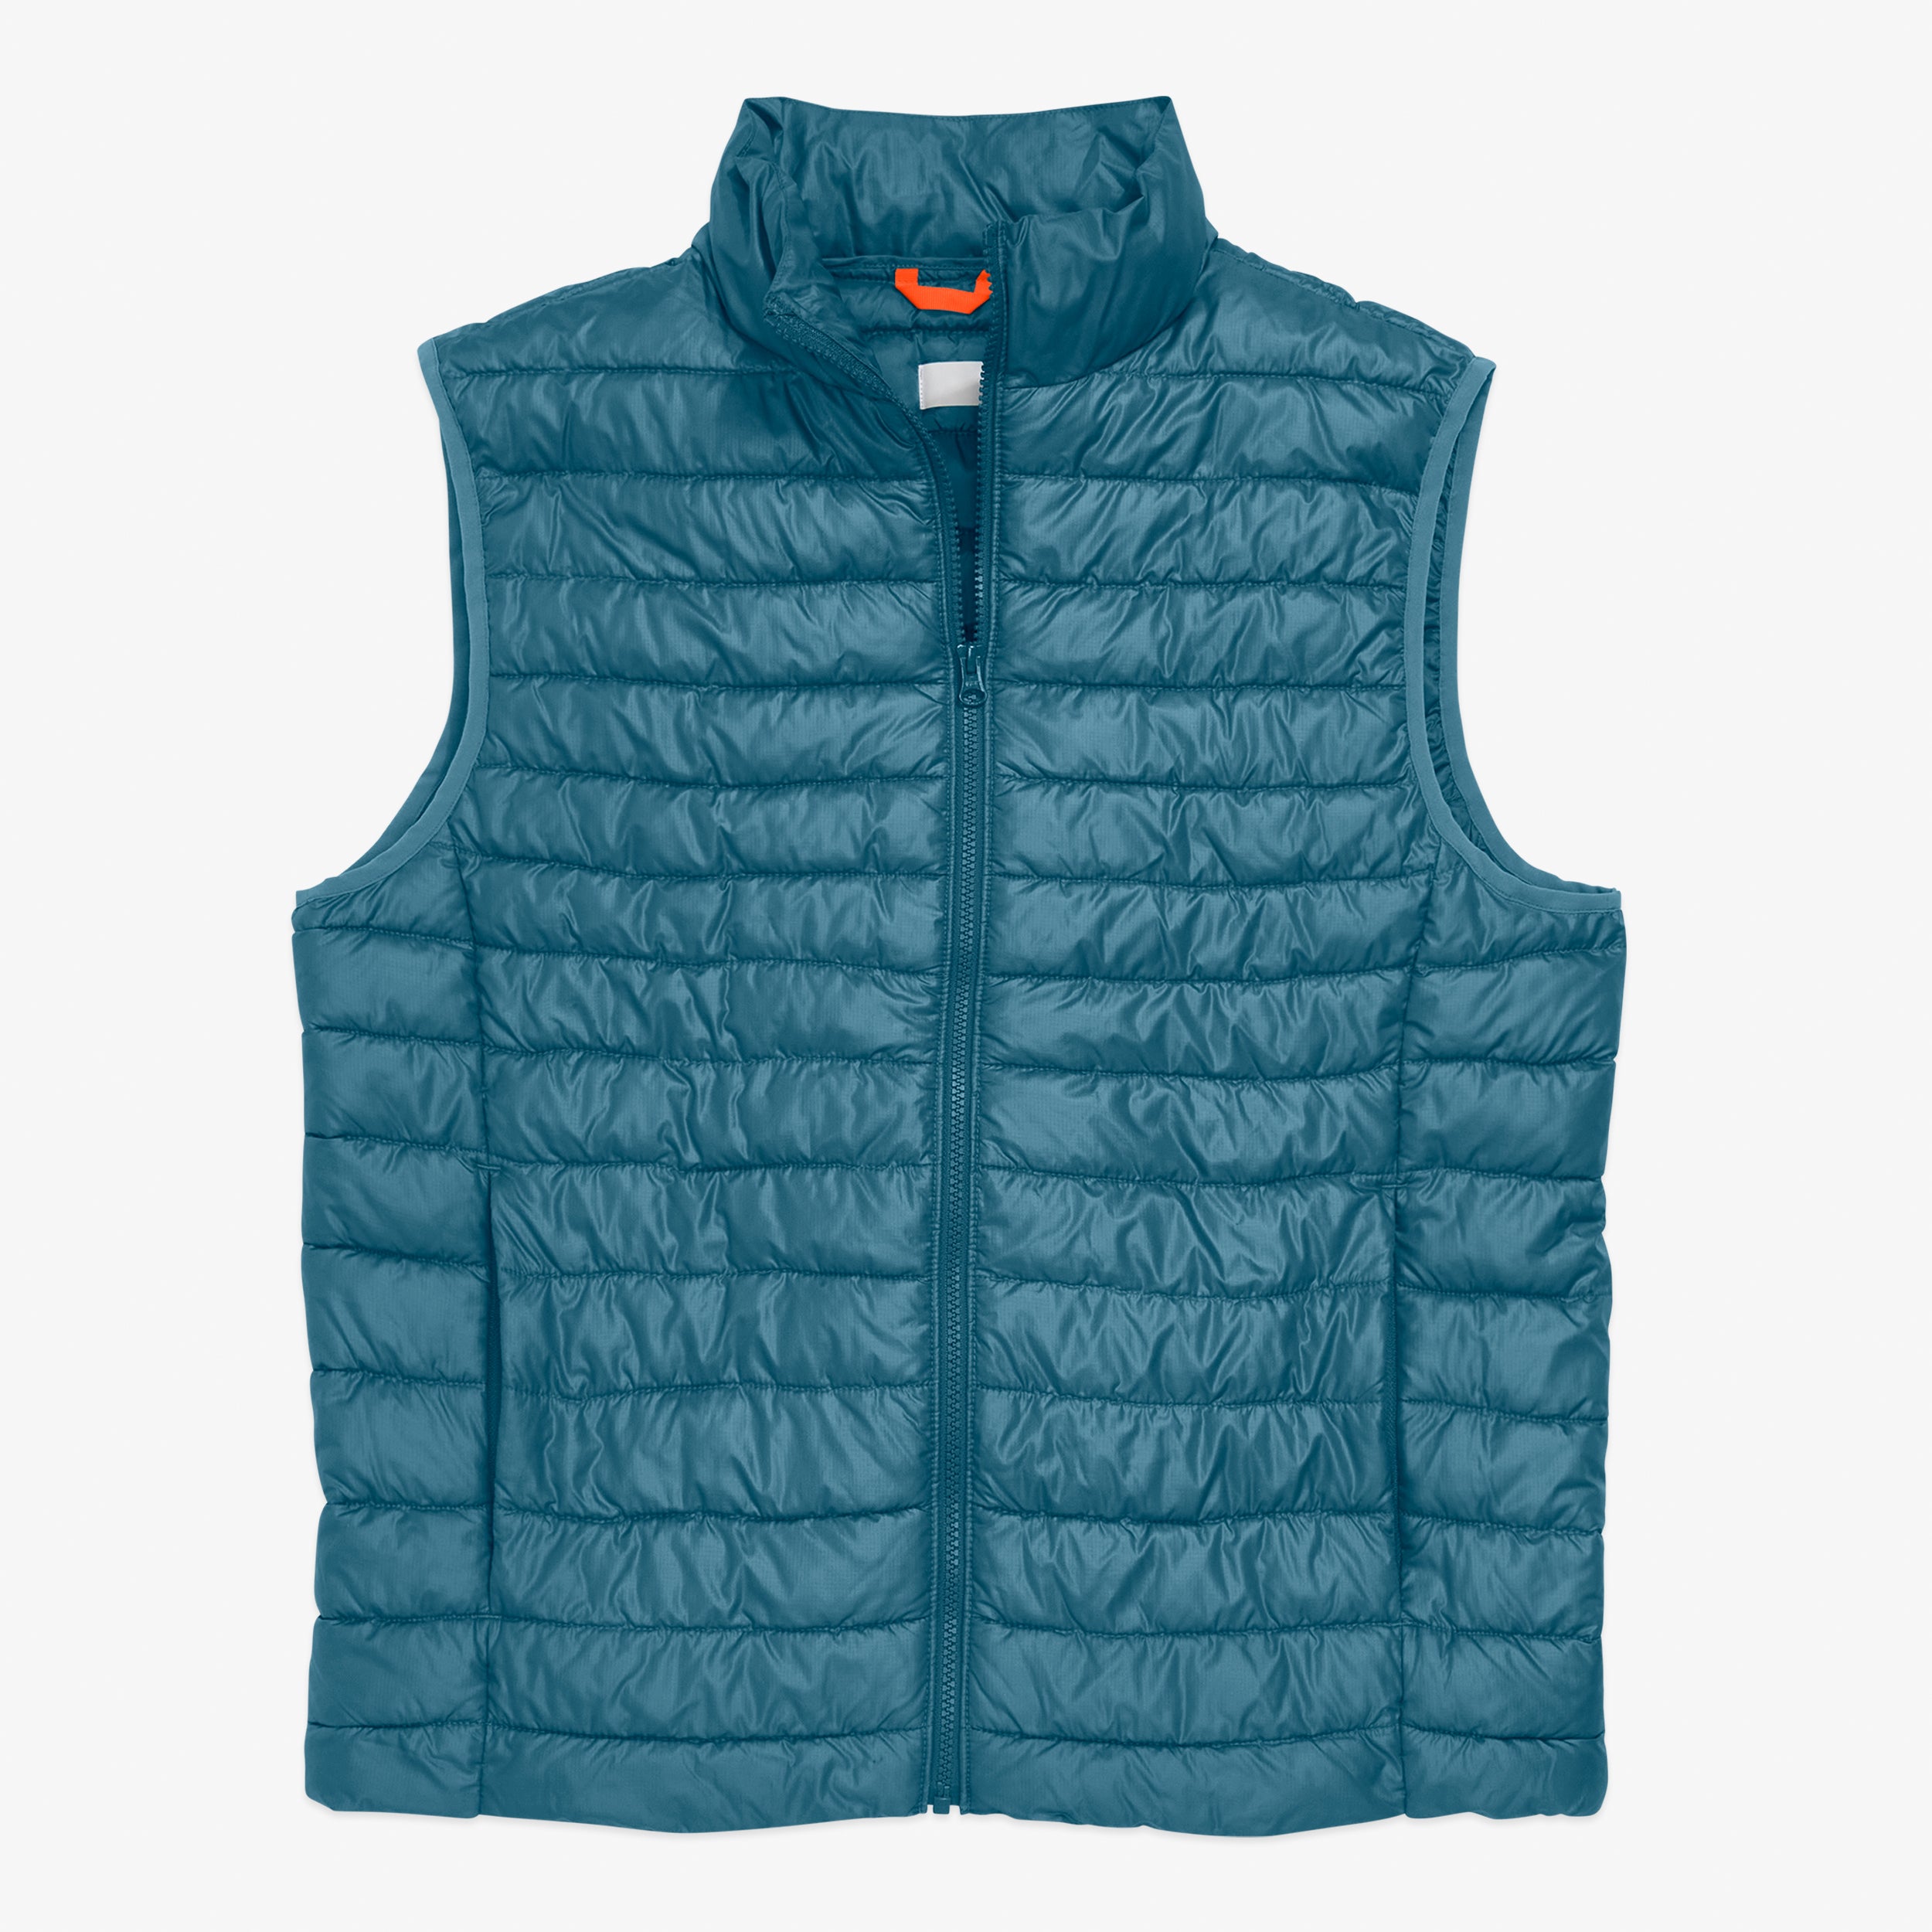 Grown-ups classic fit puffer vest